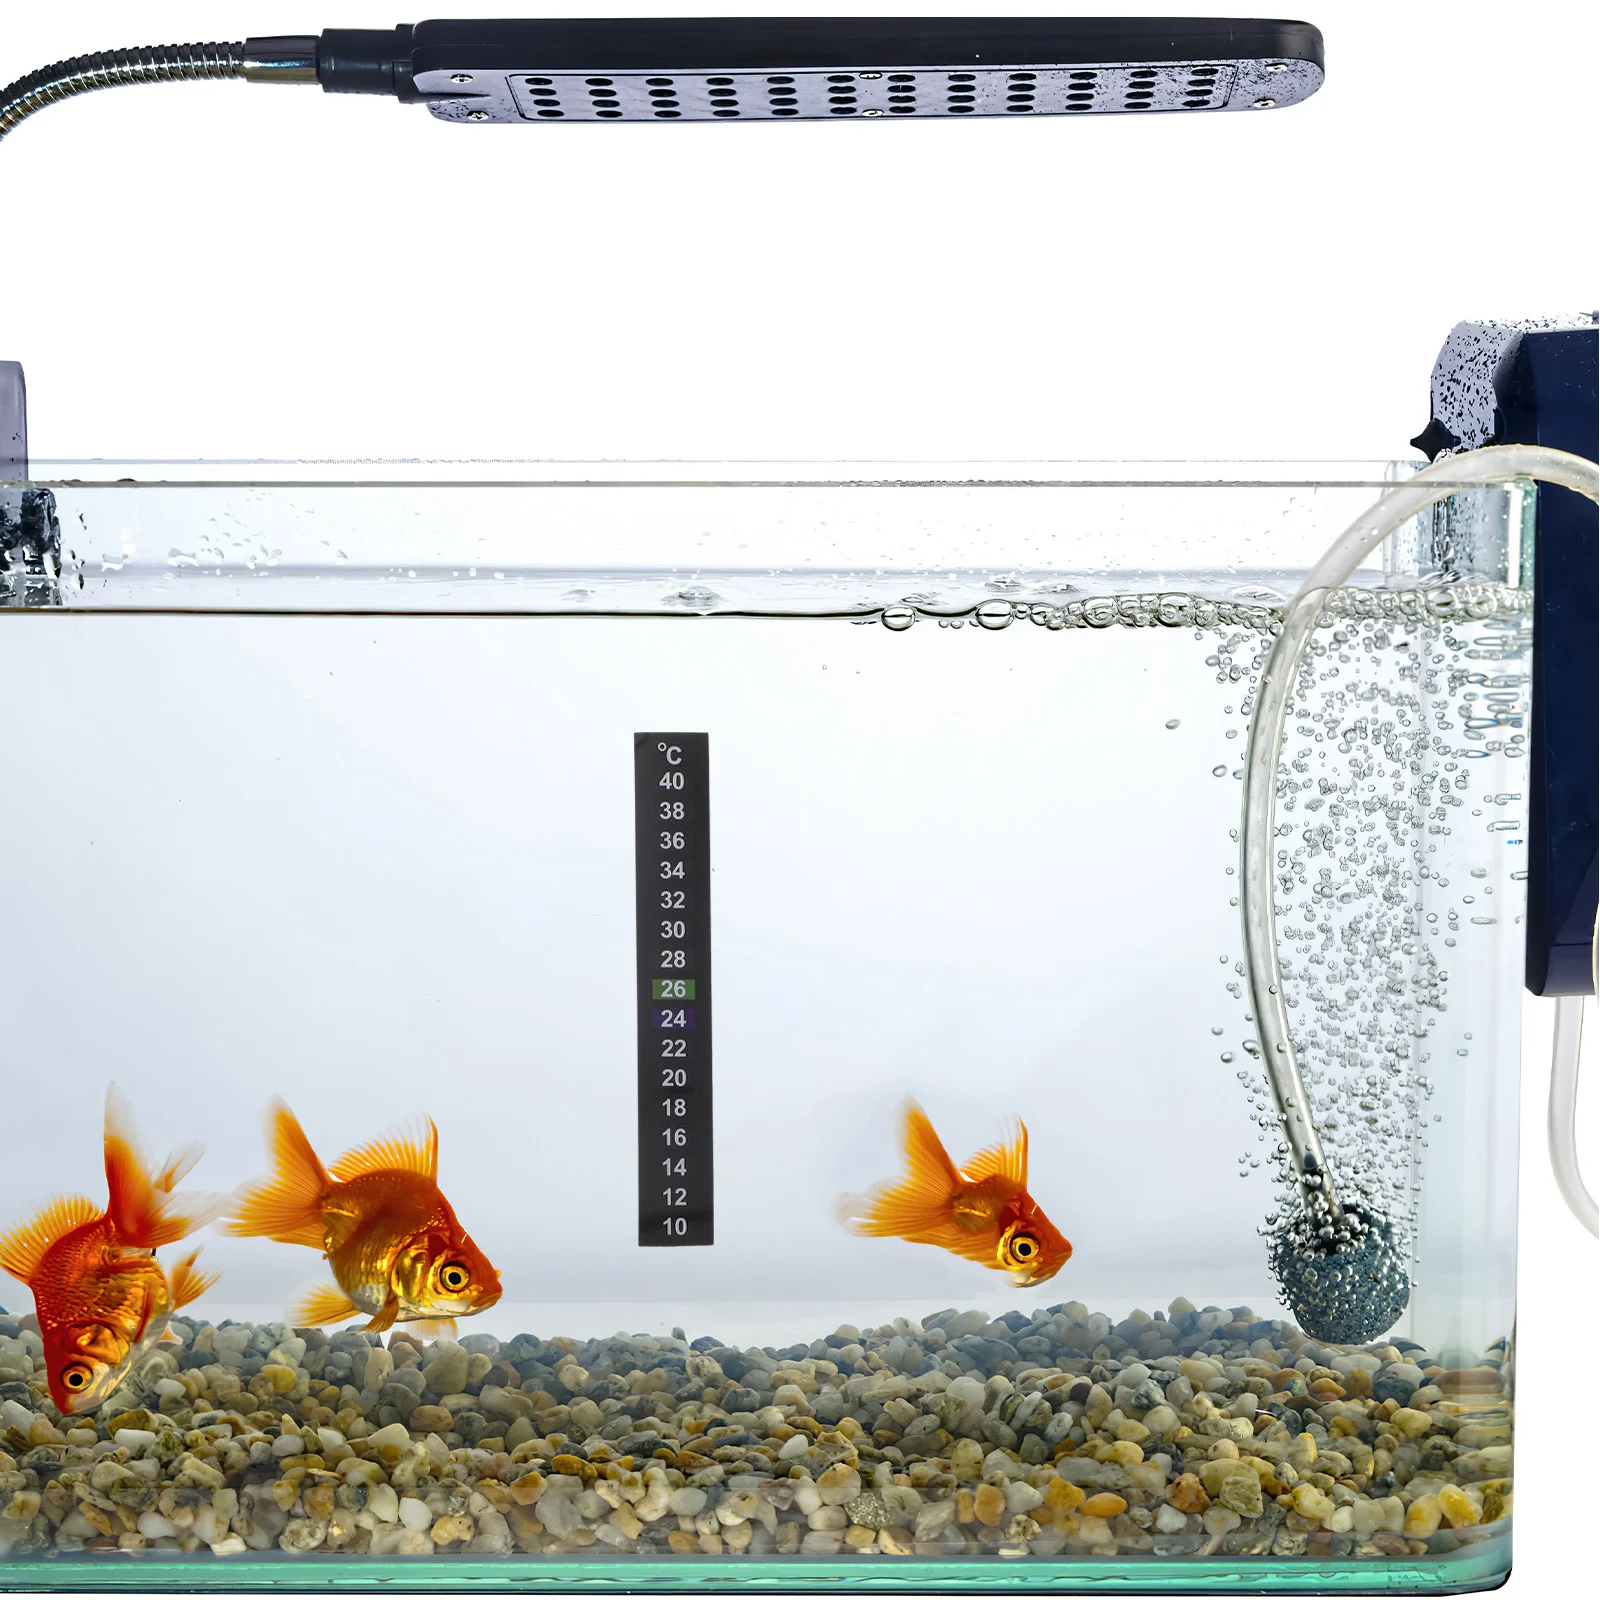 

10 Pcs Number Stickers Fish Tank Temperature Thermometer Jar Aquarium On Strip Adhesive